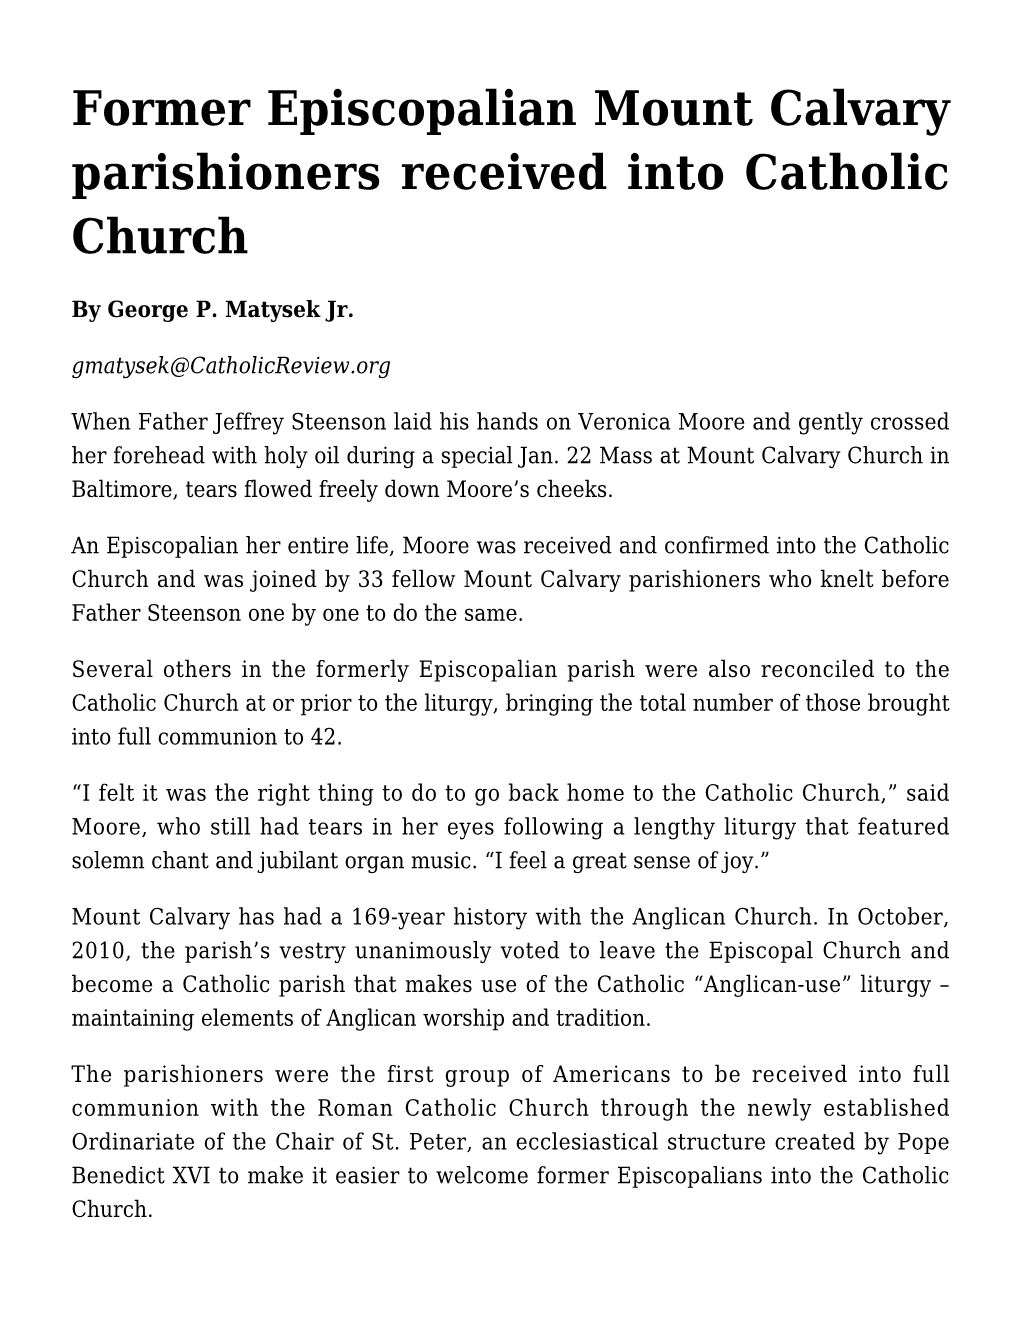 Former Episcopalian Mount Calvary Parishioners Received Into Catholic Church